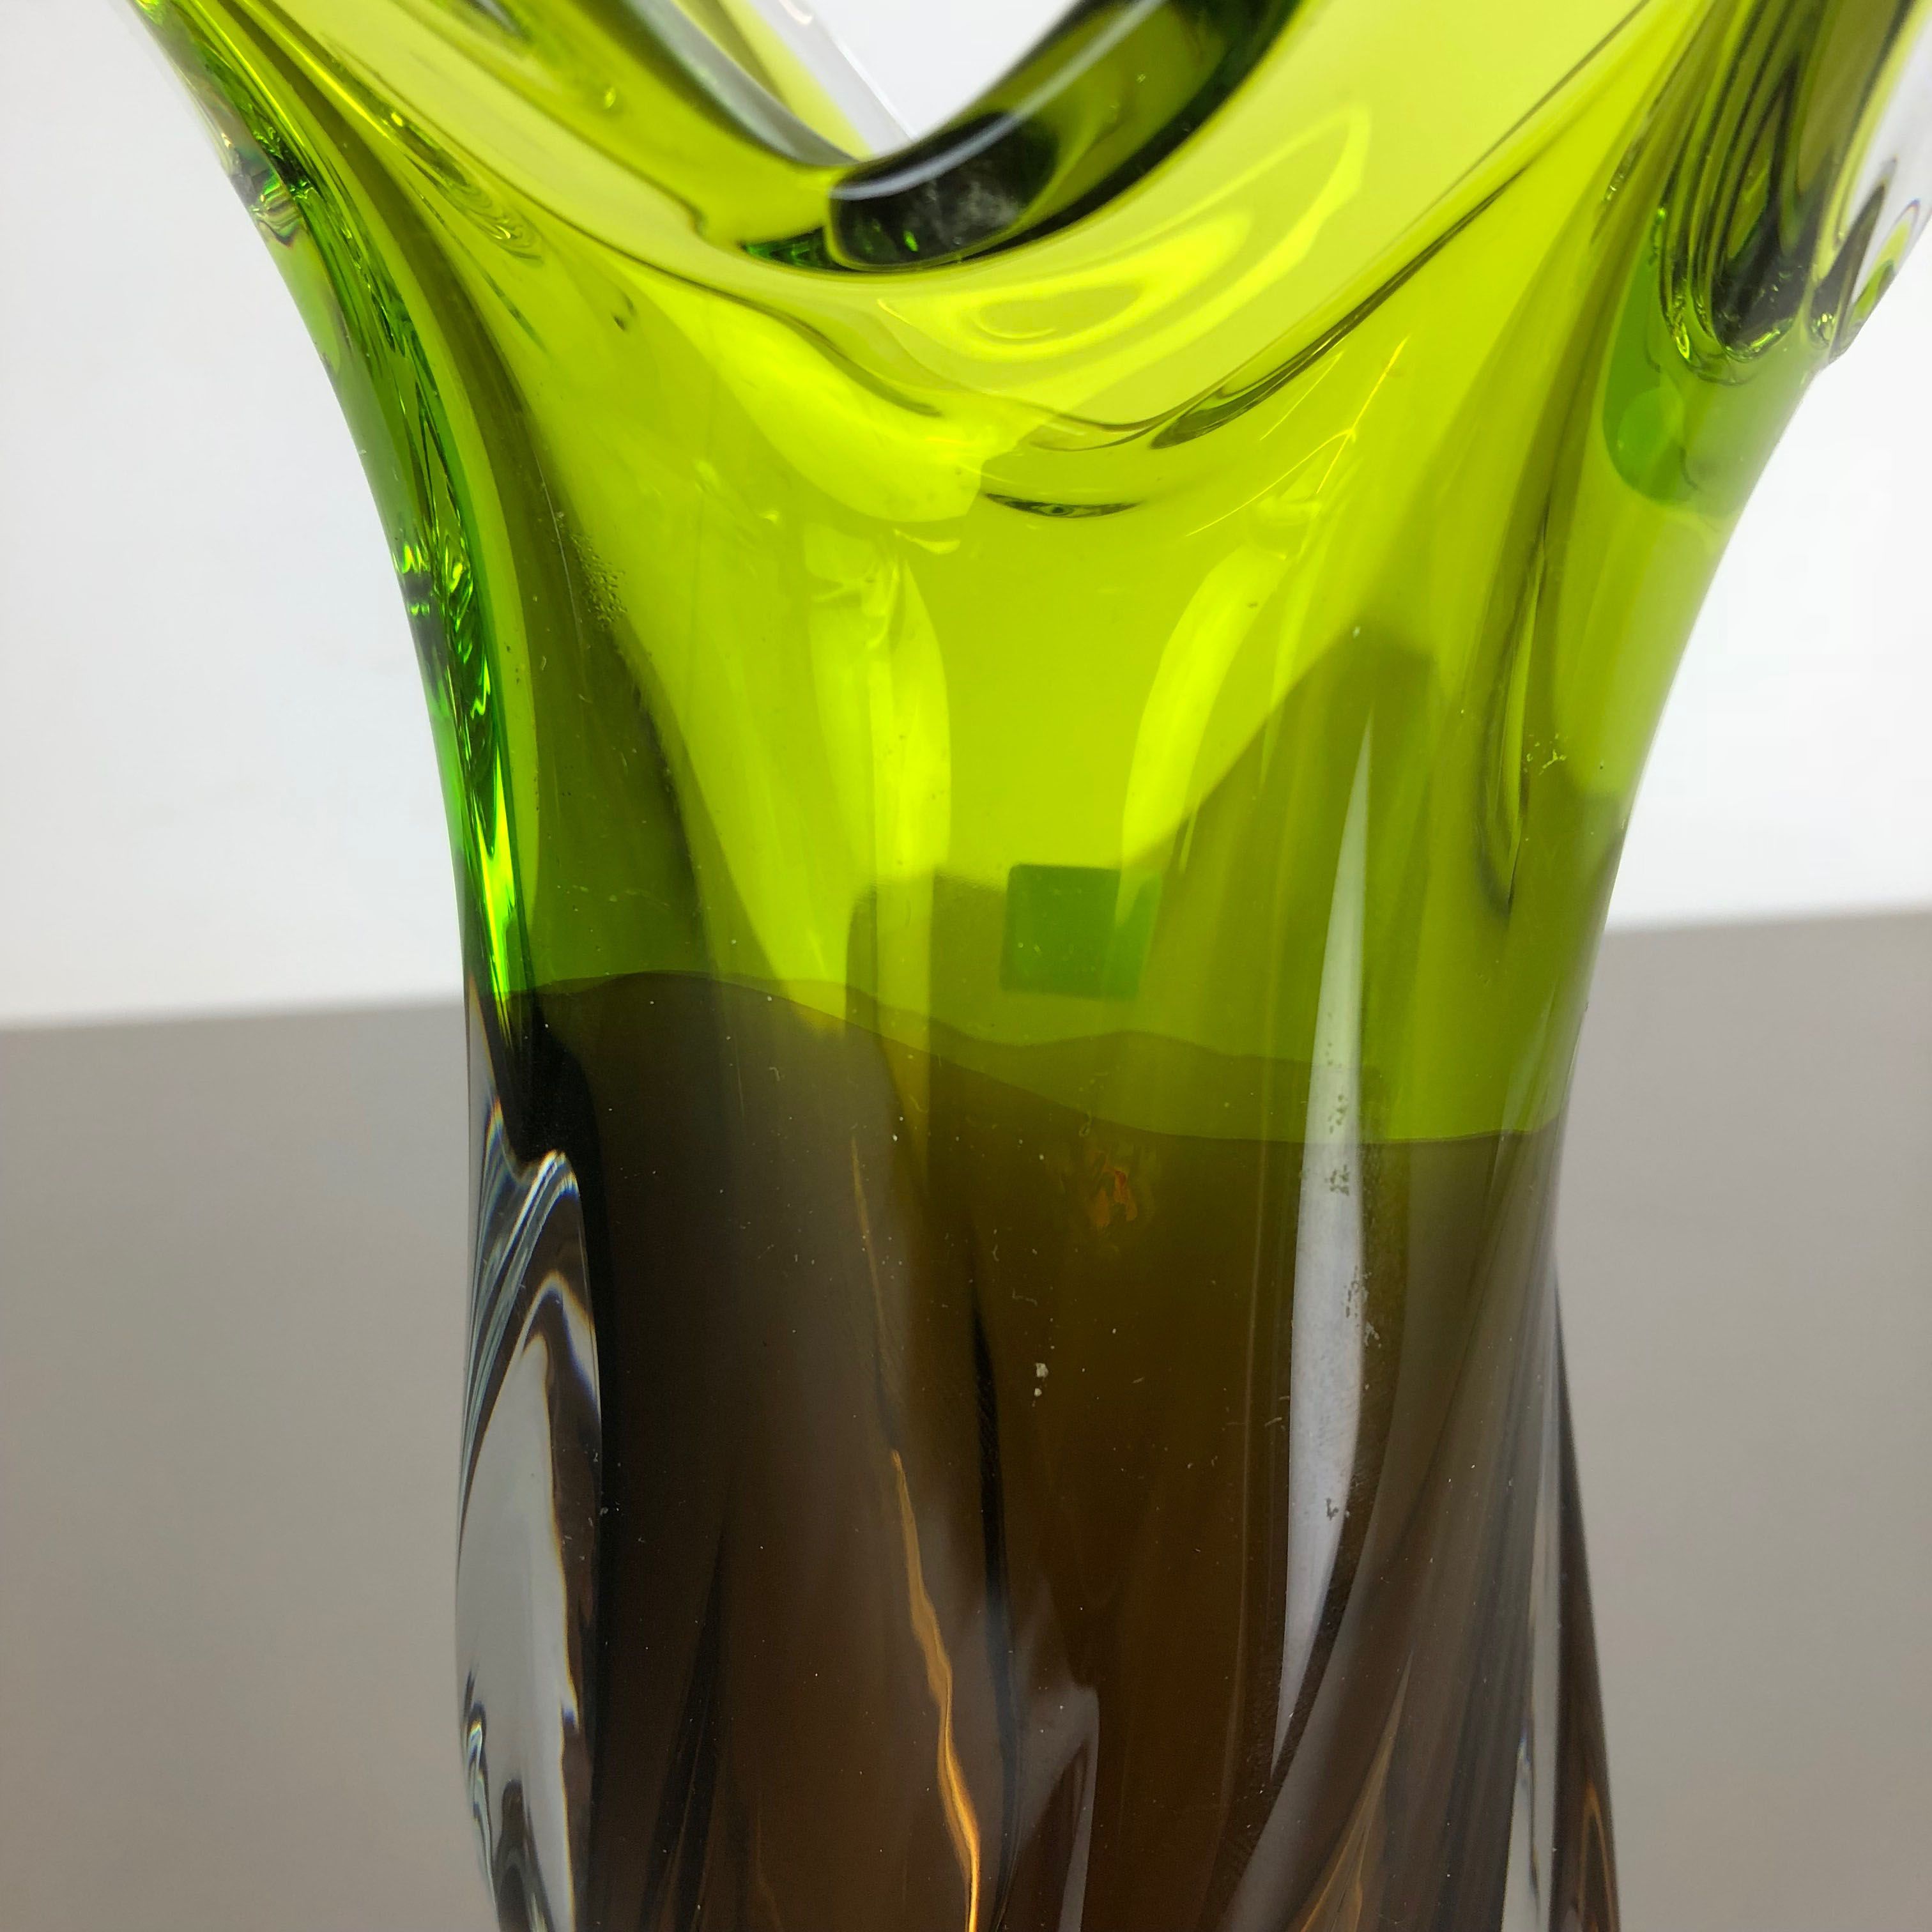 Large Vintage Green Brown Hand Blown Crystal Glass Vase By Joska Germany 1970s Design Market